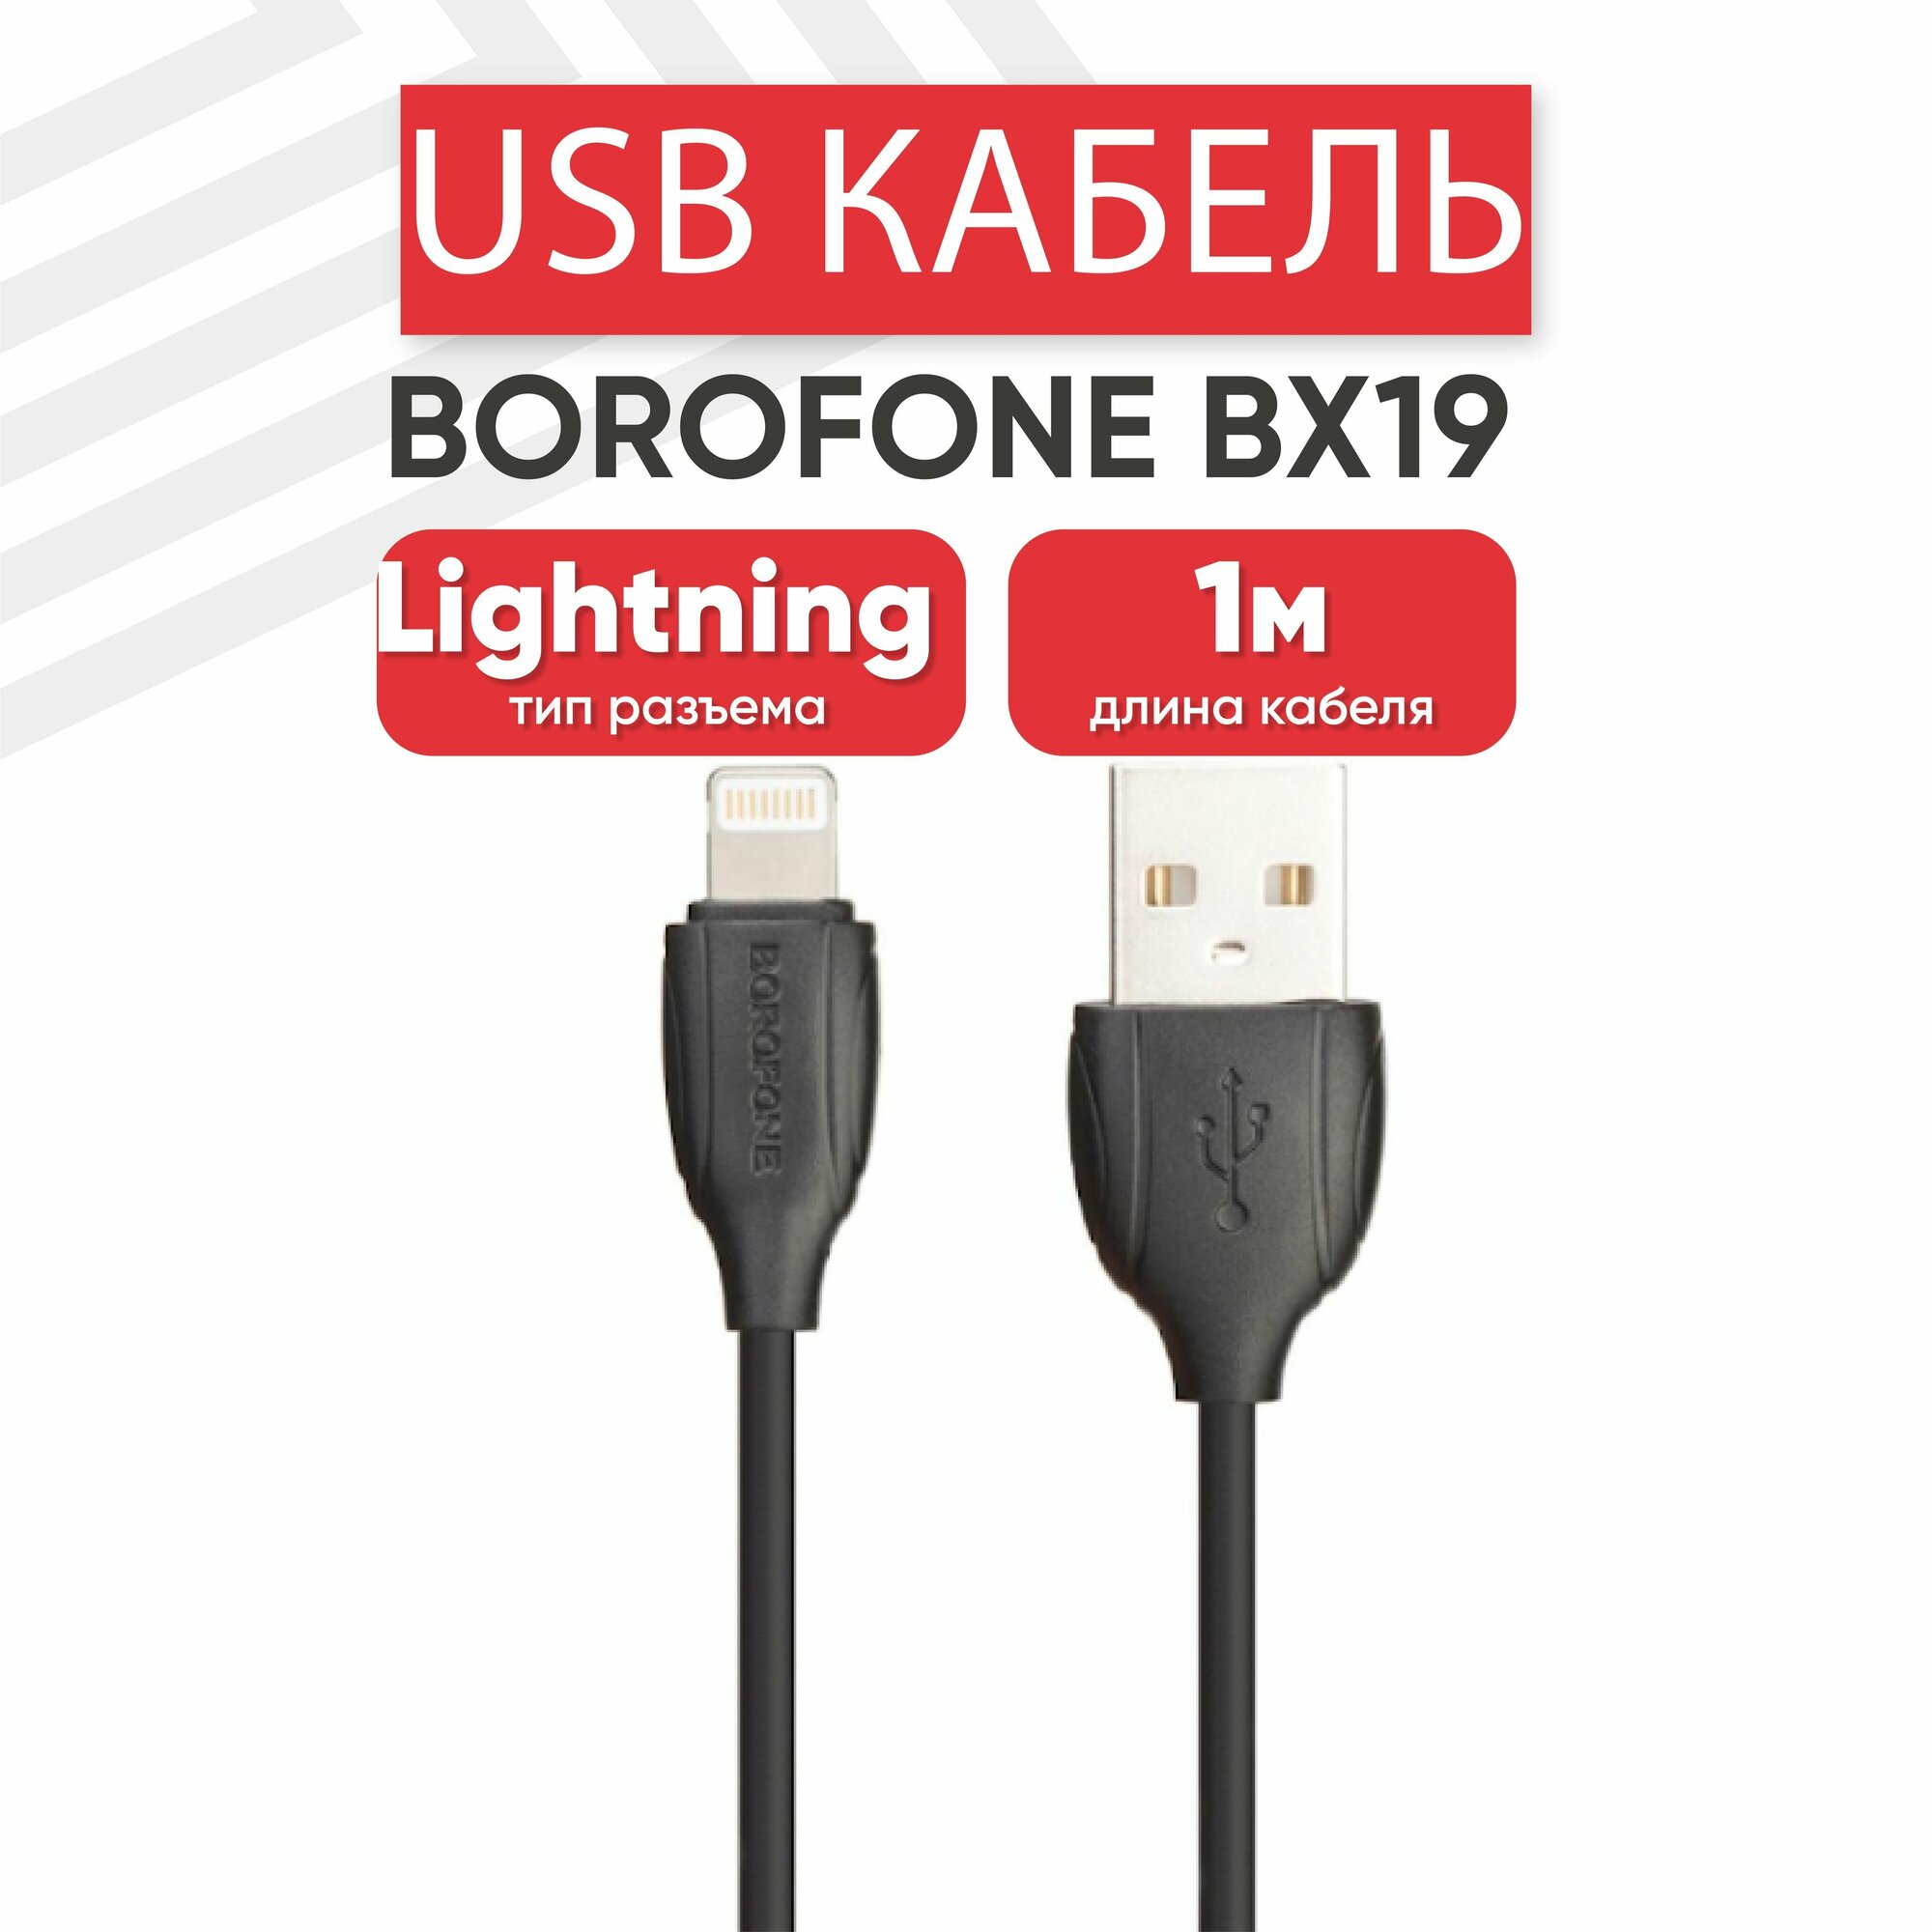 USB кабель Borofone BX19 для зарядки, передачи данных, Lightning 8-pin, 2.4А, 1 метр, PVC, черный